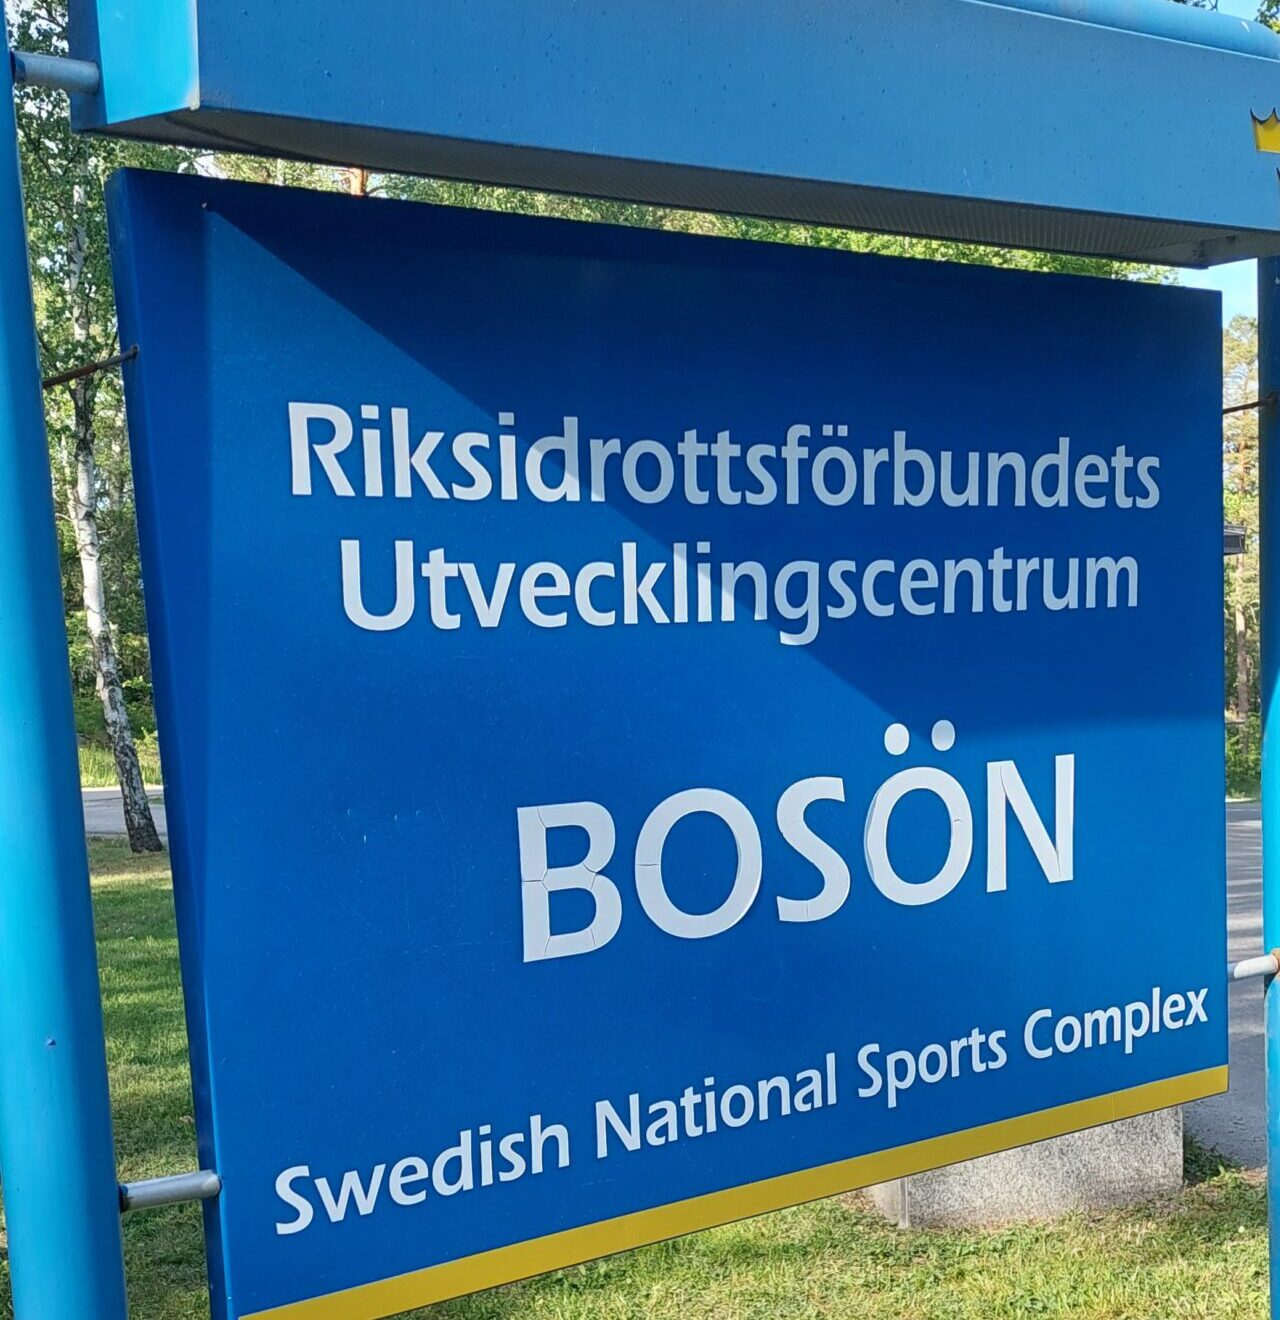 A sign that says: Riksidrottsförbundets, Utvecklingscentrum, Bosön.